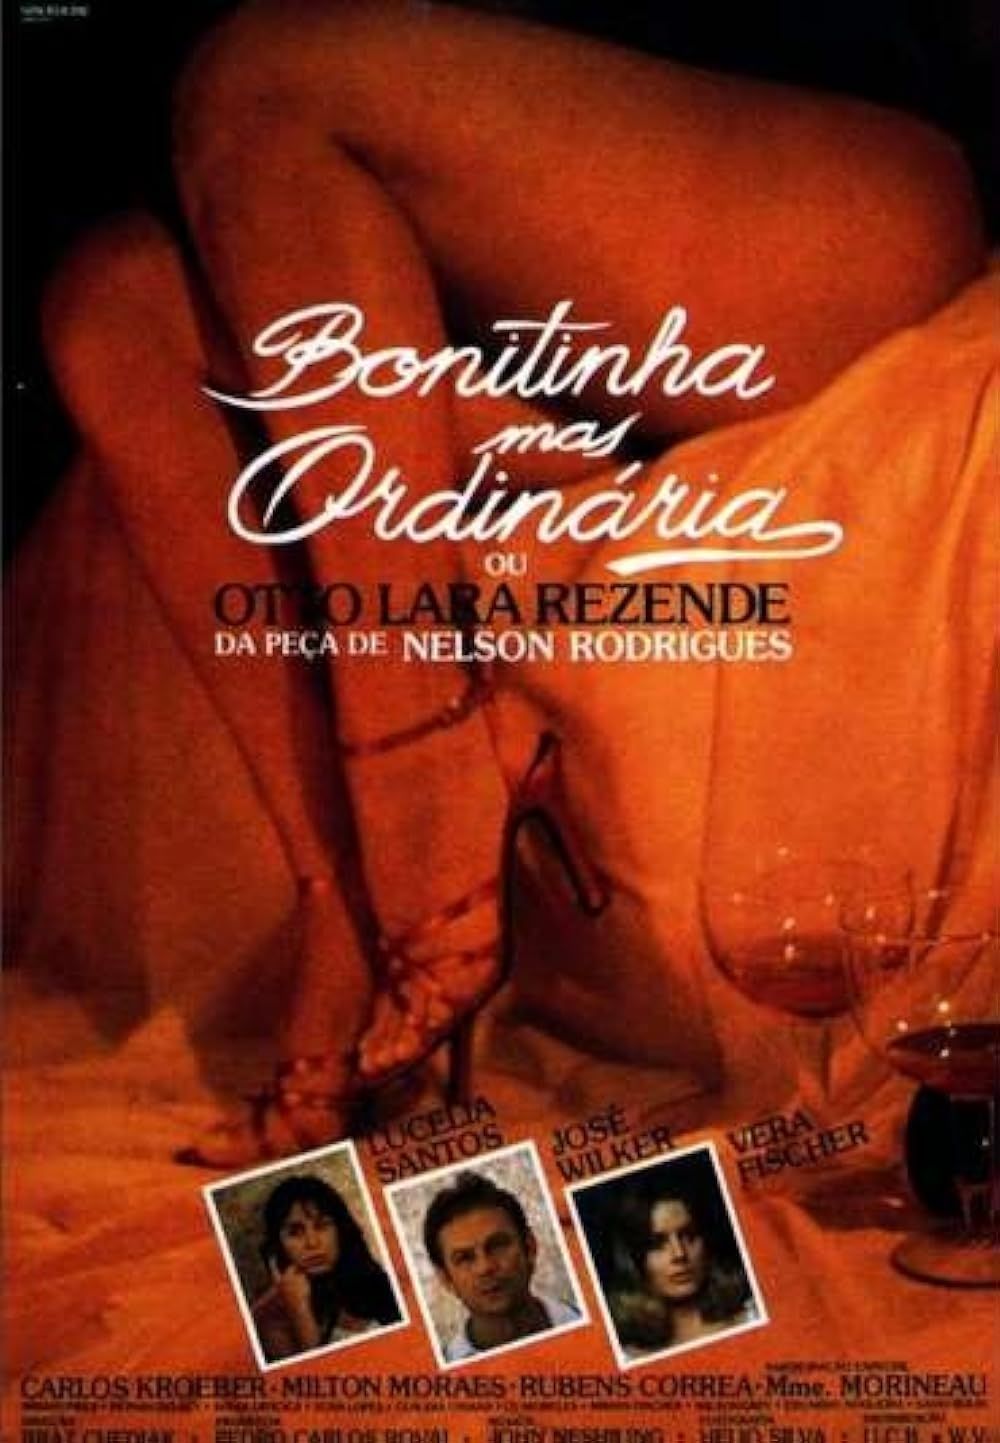 [18＋] Bonitinha Mas Ordinaria ou Otto Lara Rezende (1981) UNRATED Movie download full movie